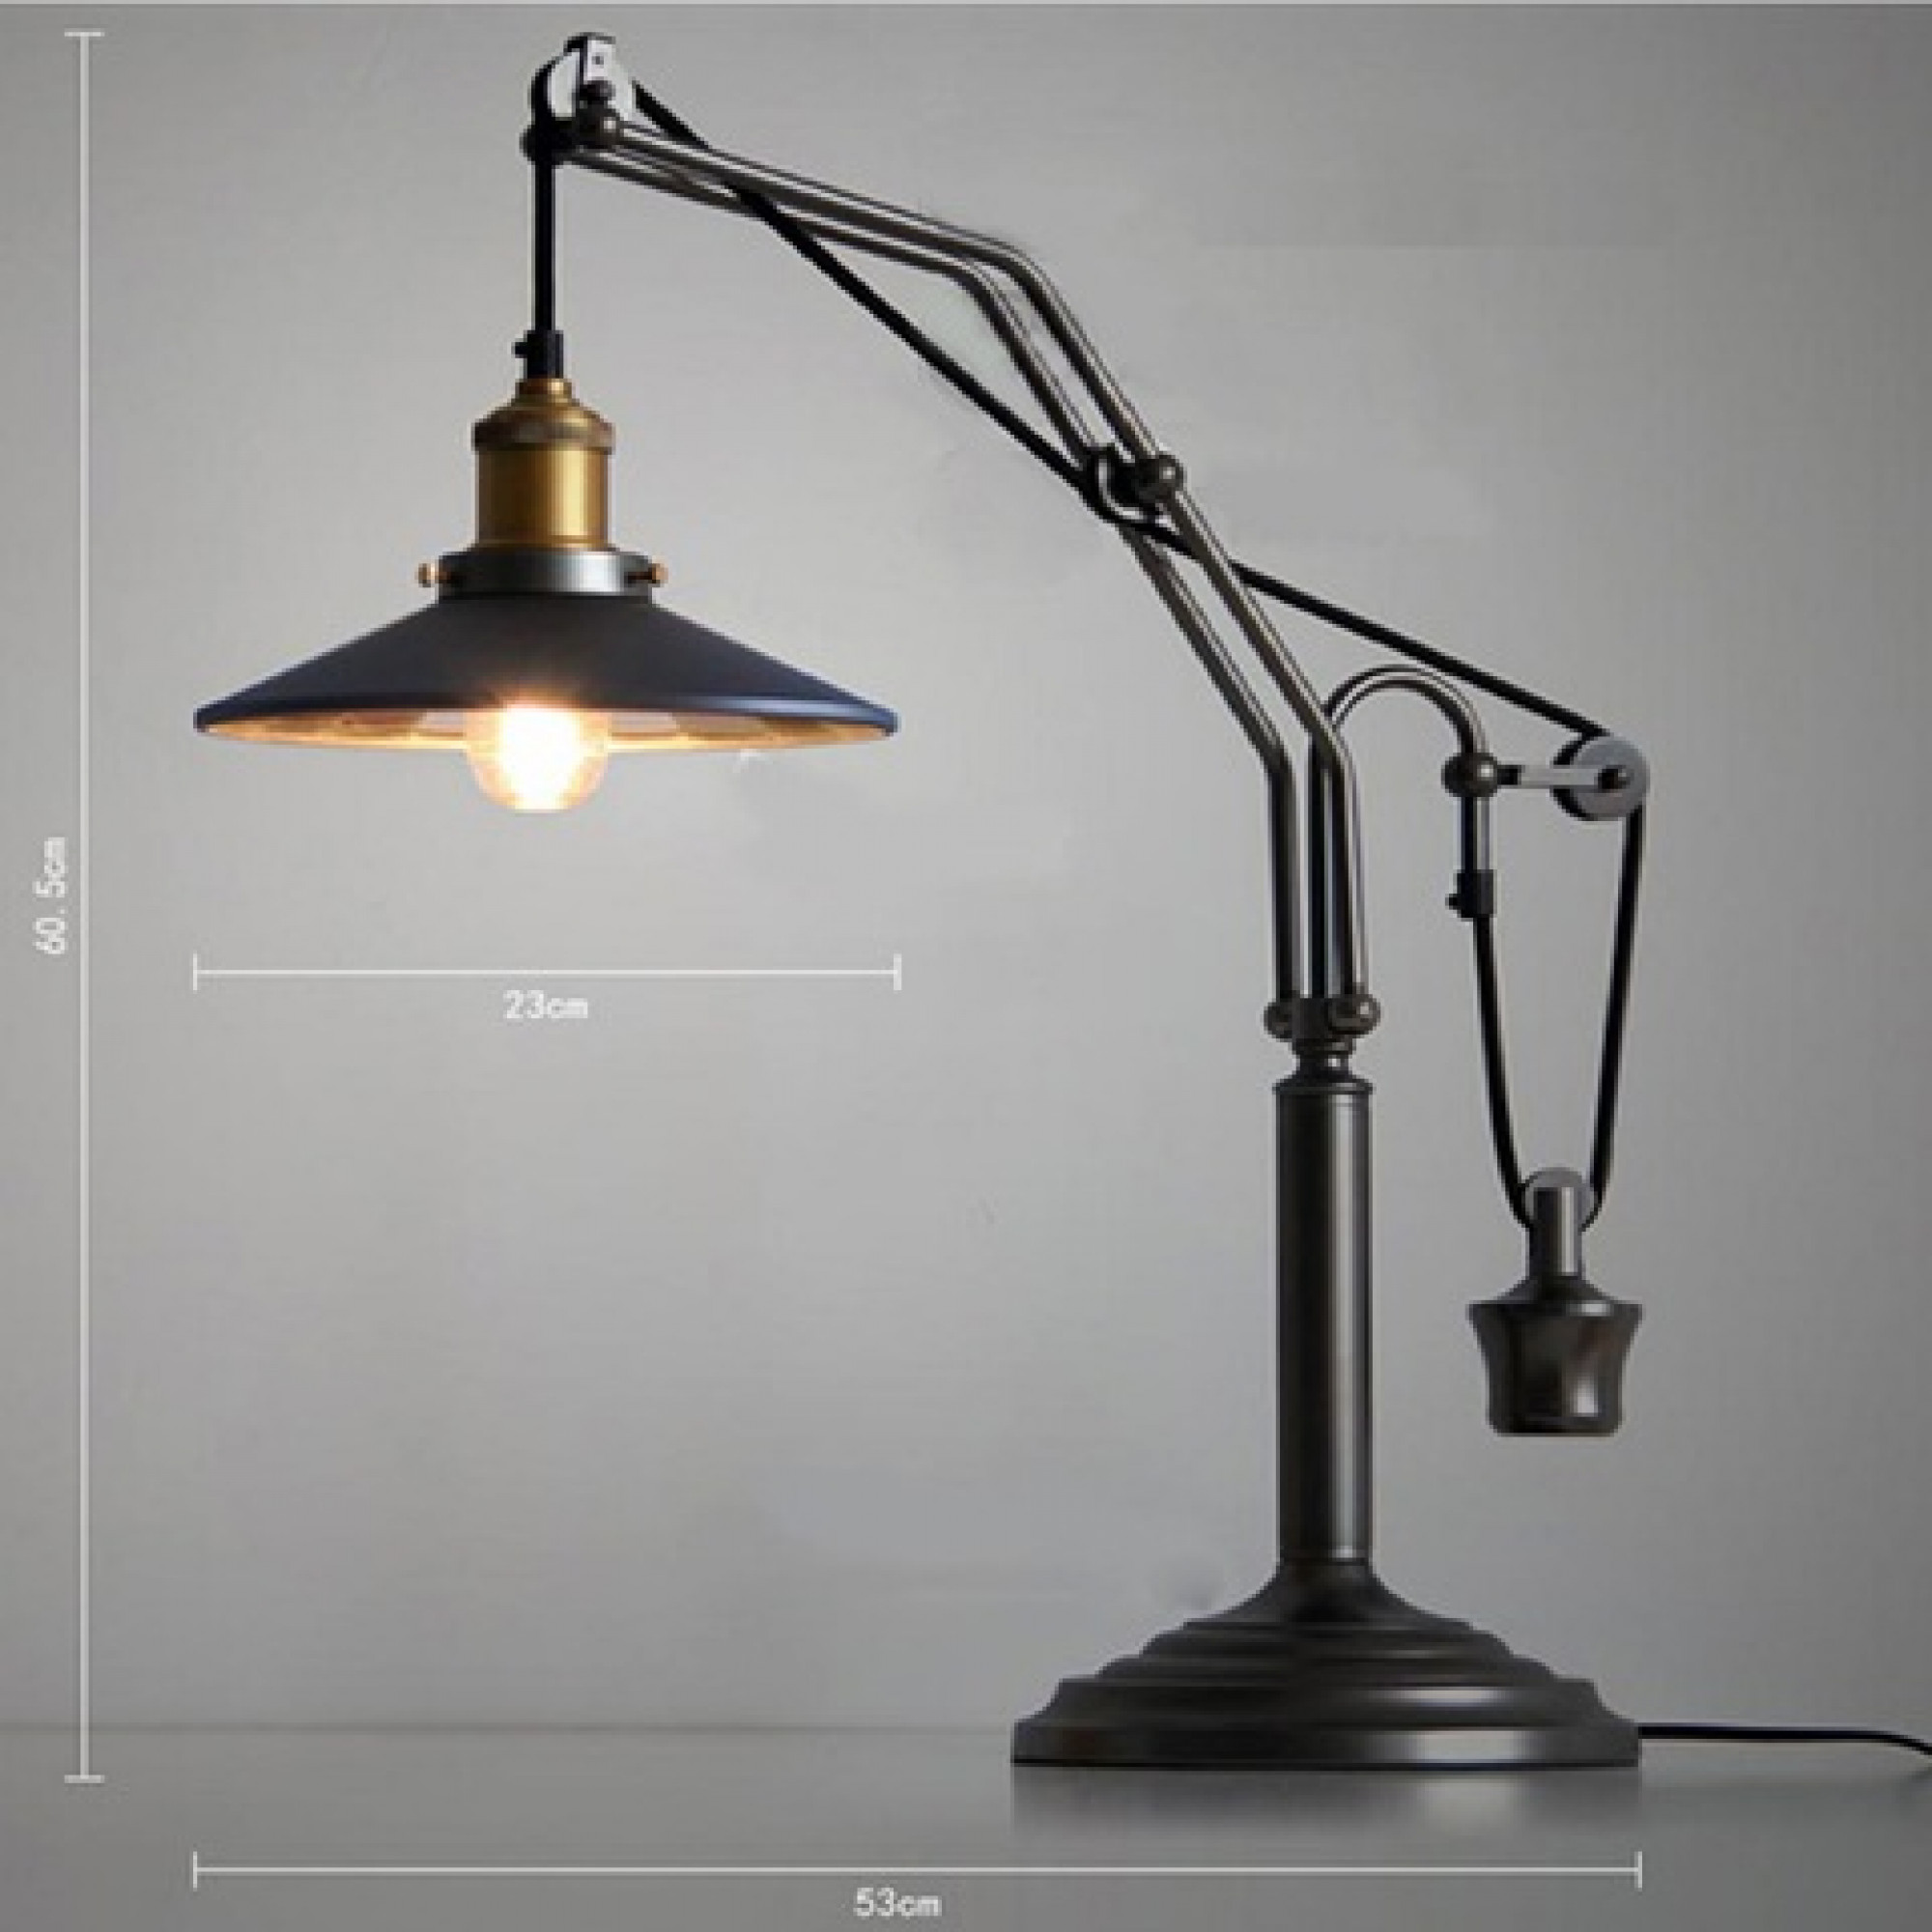 Стальные фонари crane. Лампа Industrial Table Lamp 3879. Настольные лампа Delamp Industrial Table Lamp 3879. Светильник настольный лофт Индастриал. Настольная лампа Индастриал лофт.